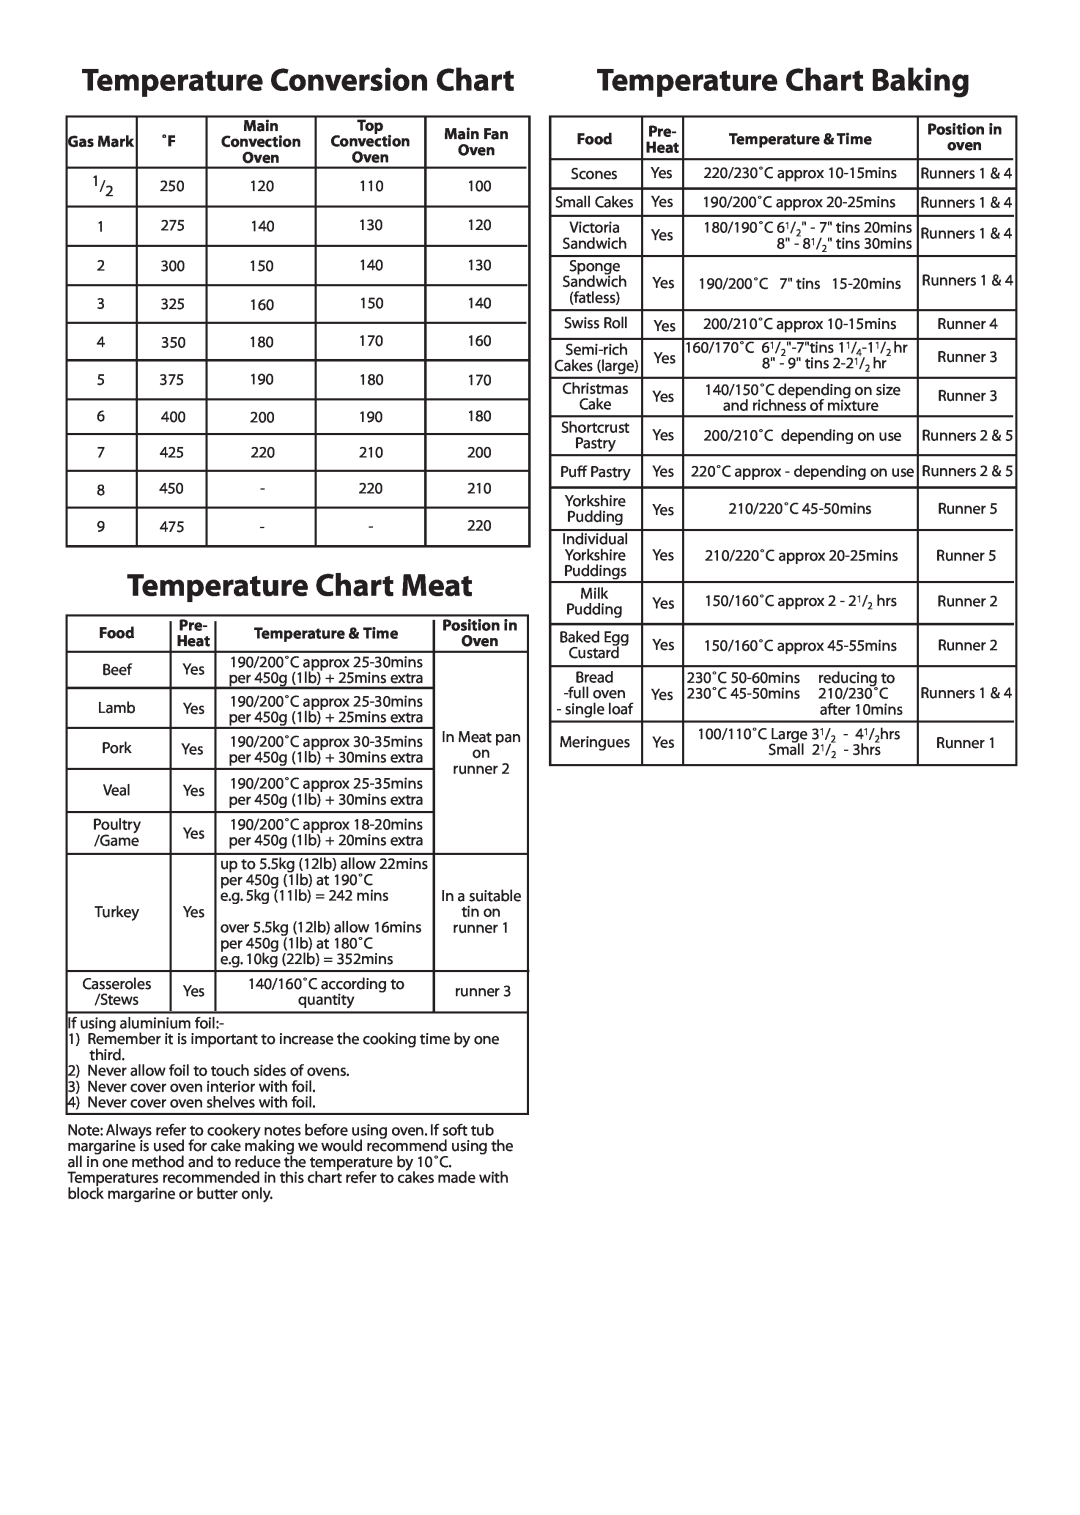 Creda J151E installation instructions Temperature Conversion Chart, Temperature Chart Meat, Temperature Chart Baking 